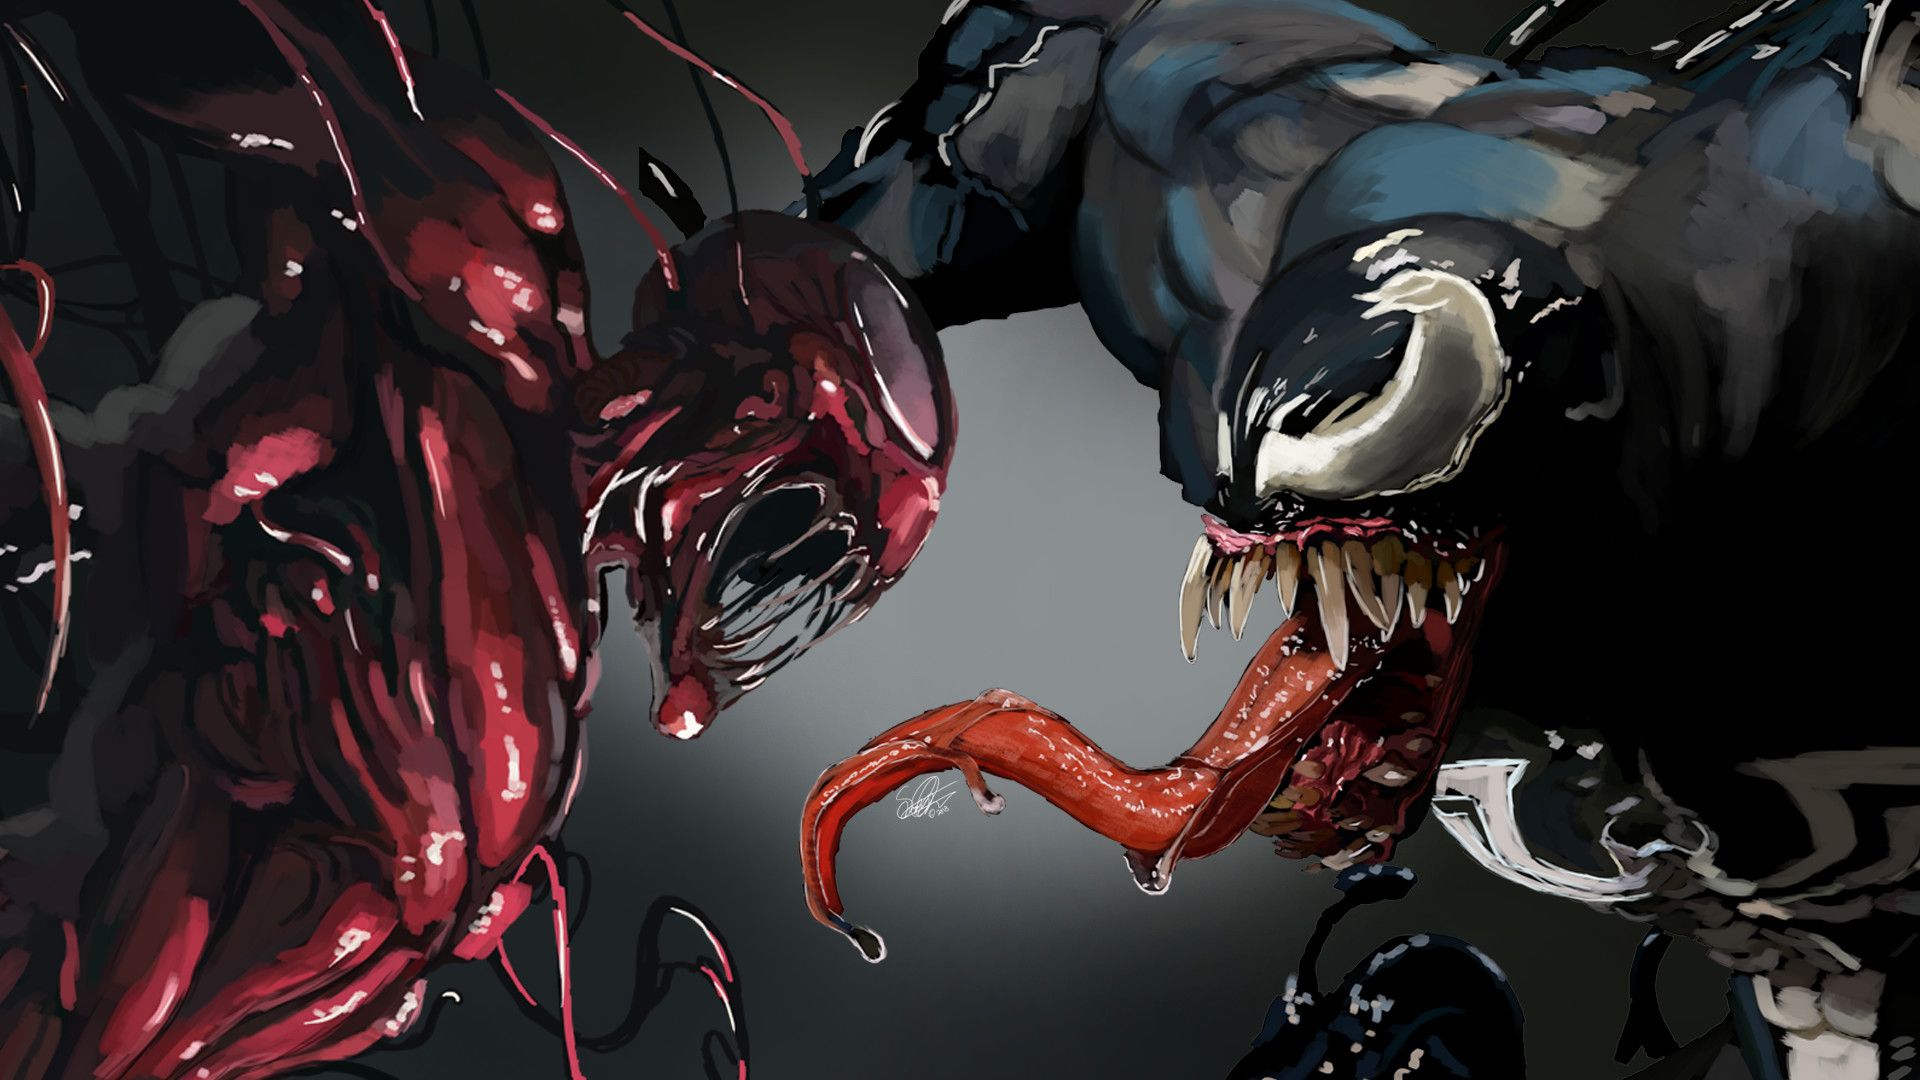 Carnage Vs Venom Wallpaper .pavbca.com